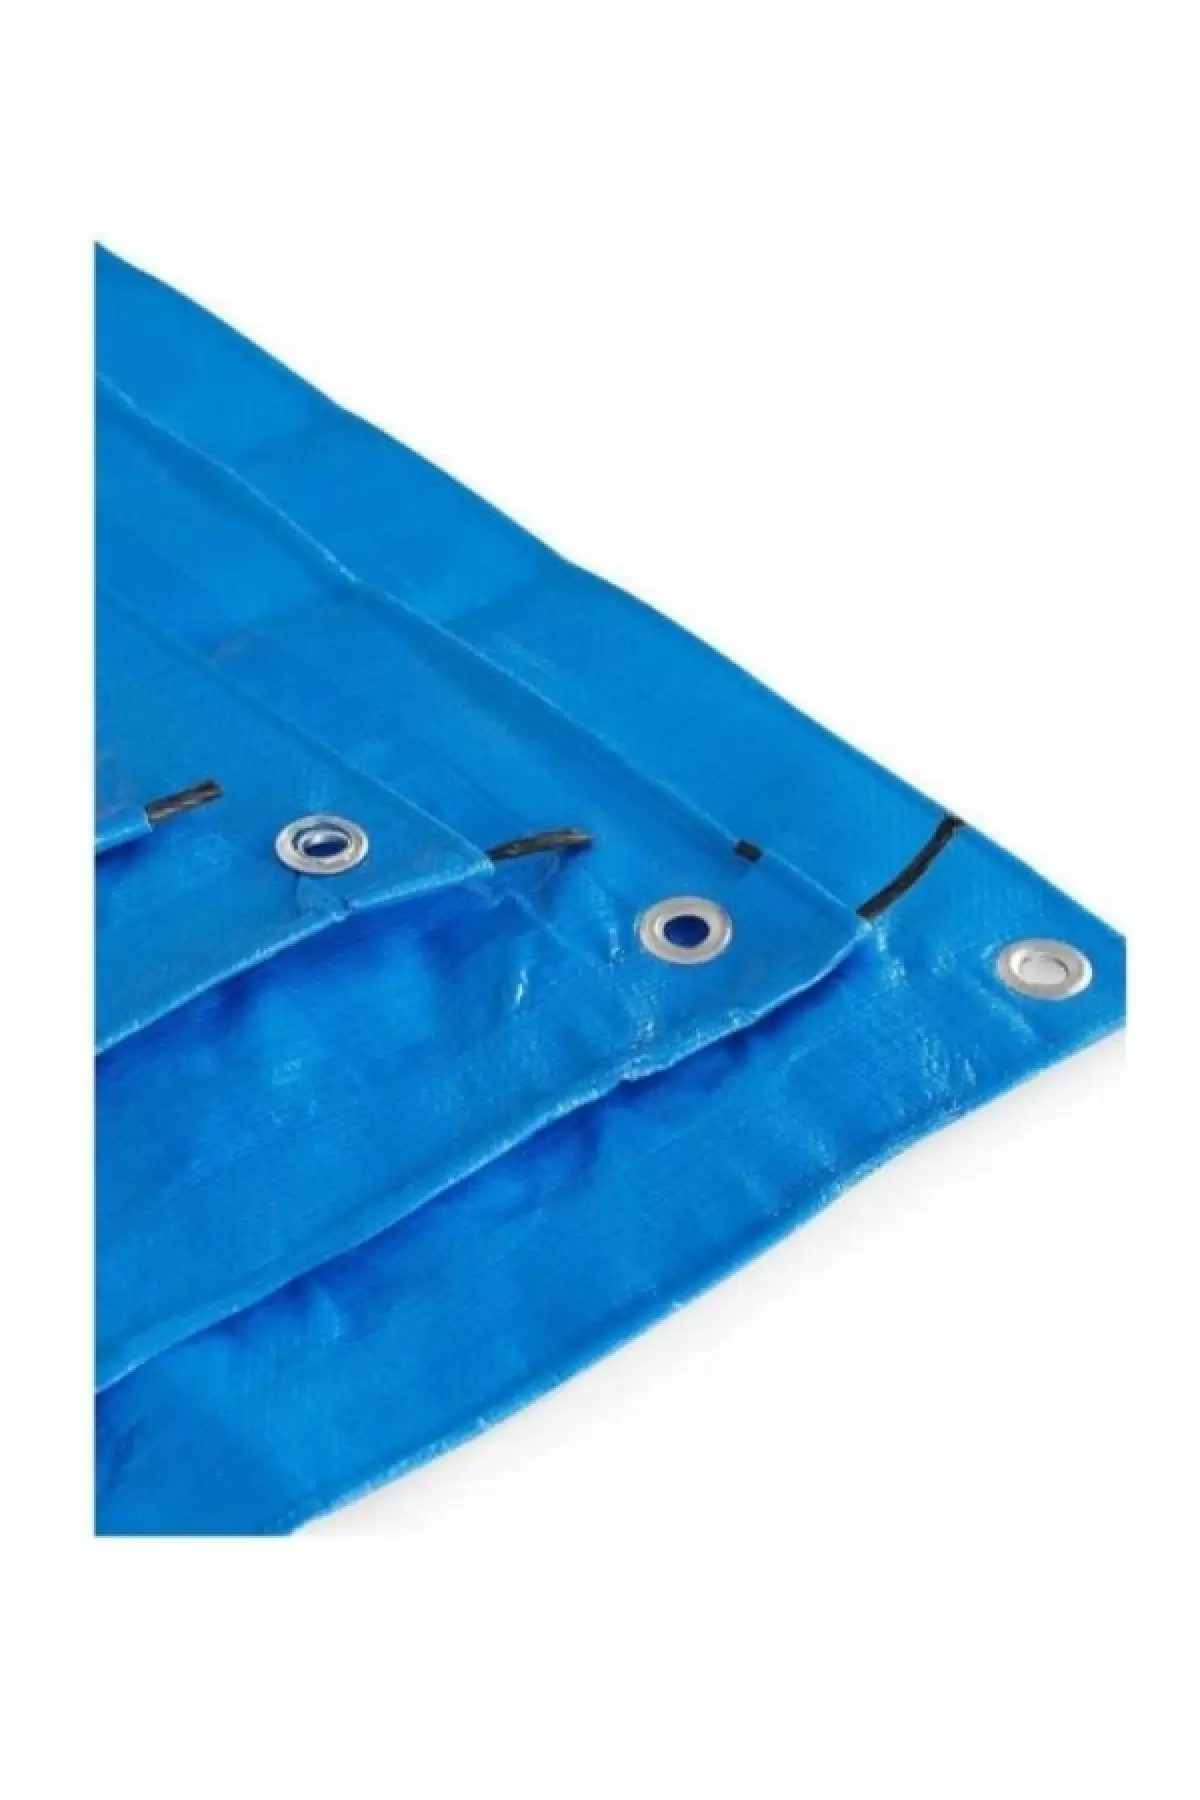 Su Geçirmez PVC-Parafin Gölgelik Çadır-Tente-Branda Mavi 12x18 m